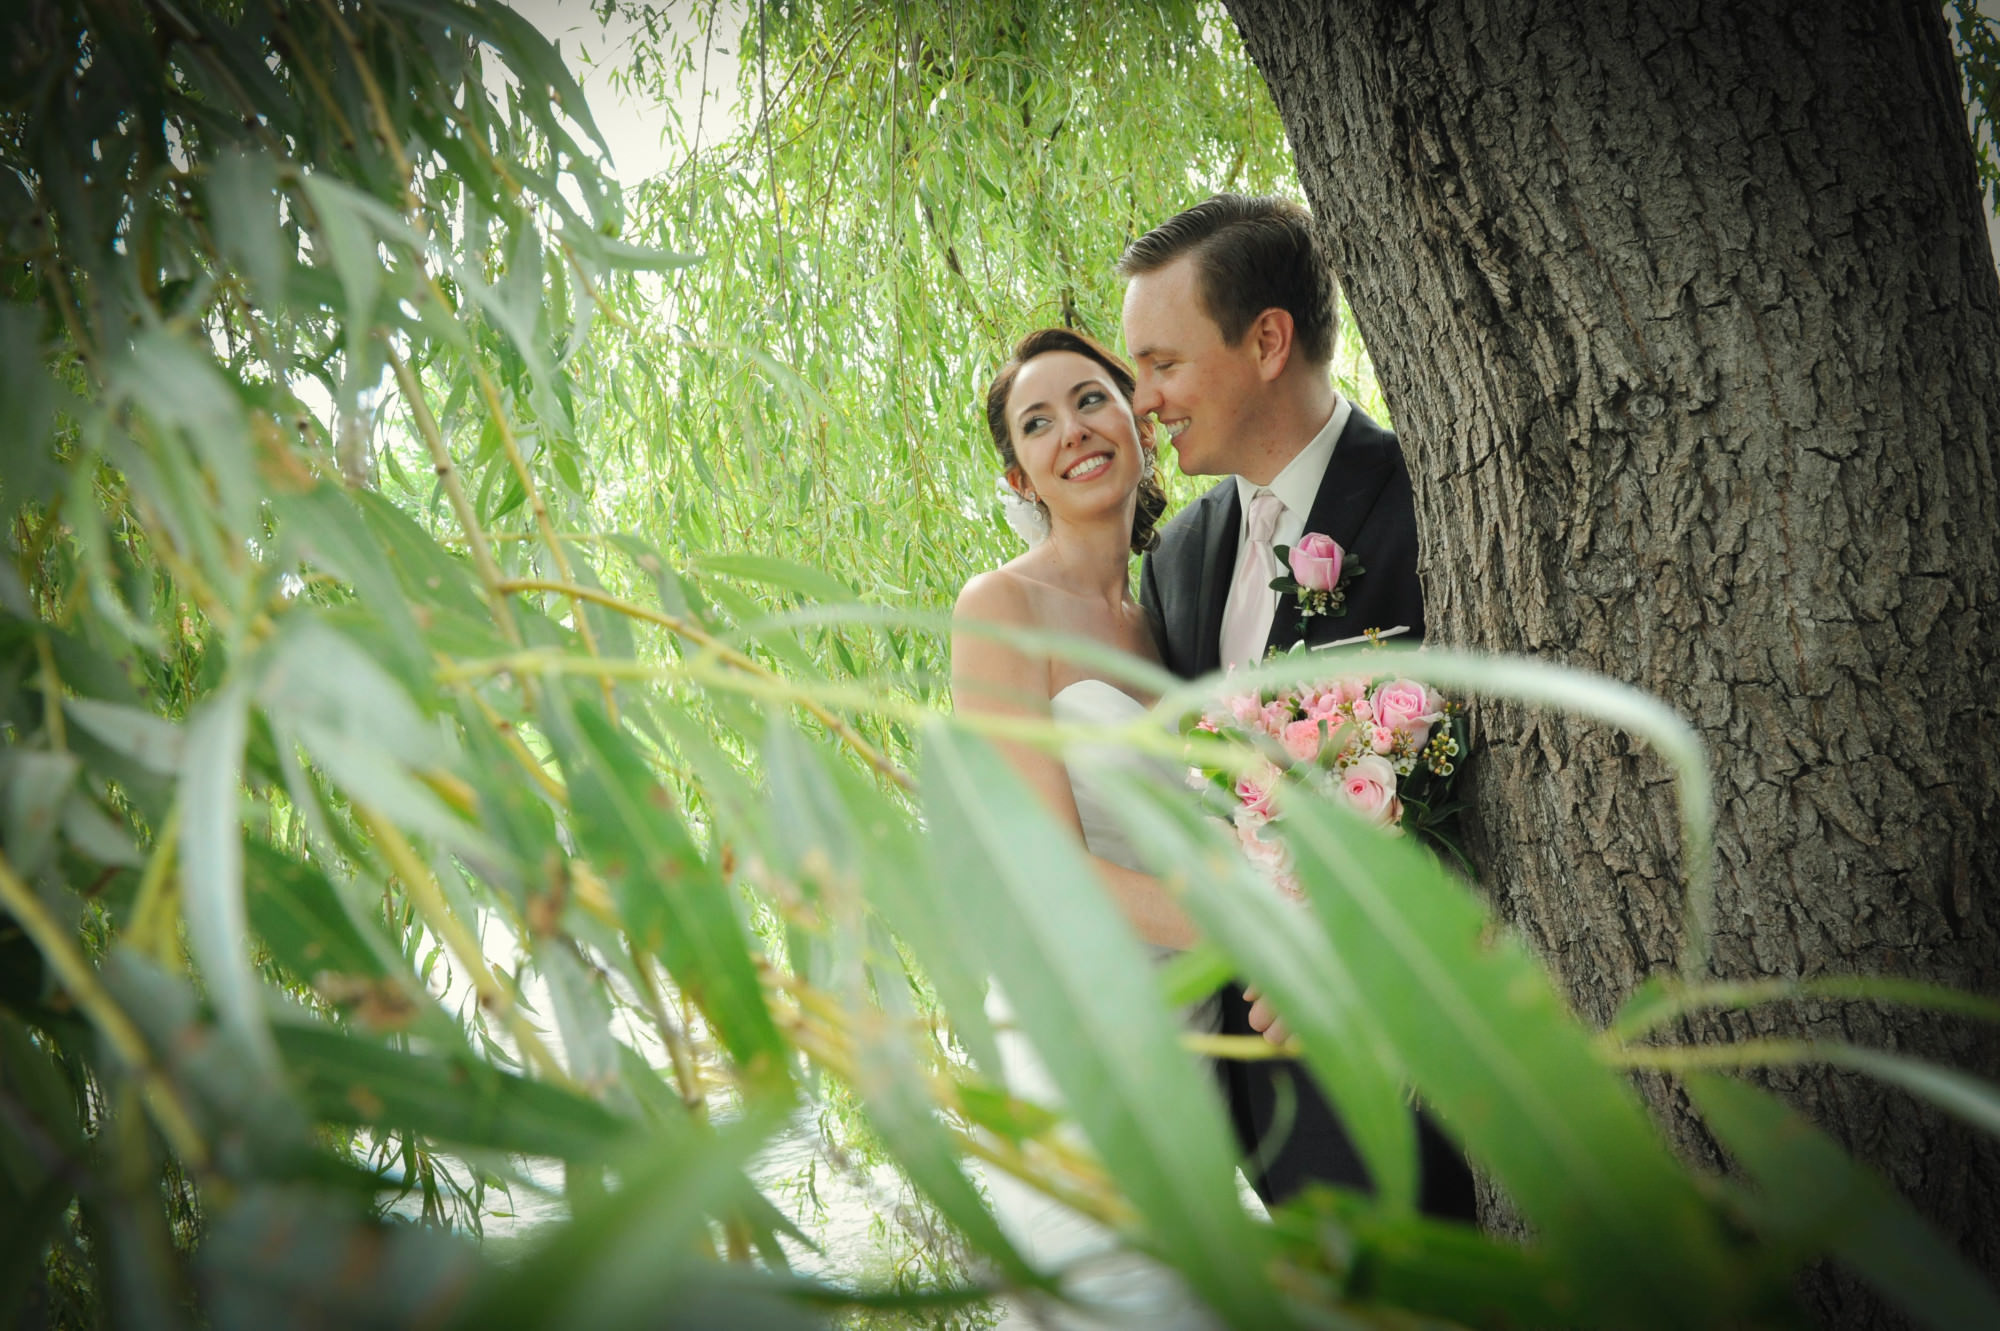 lavimage wedding photography vera varley alesya kornetskaya outdoor wedding 